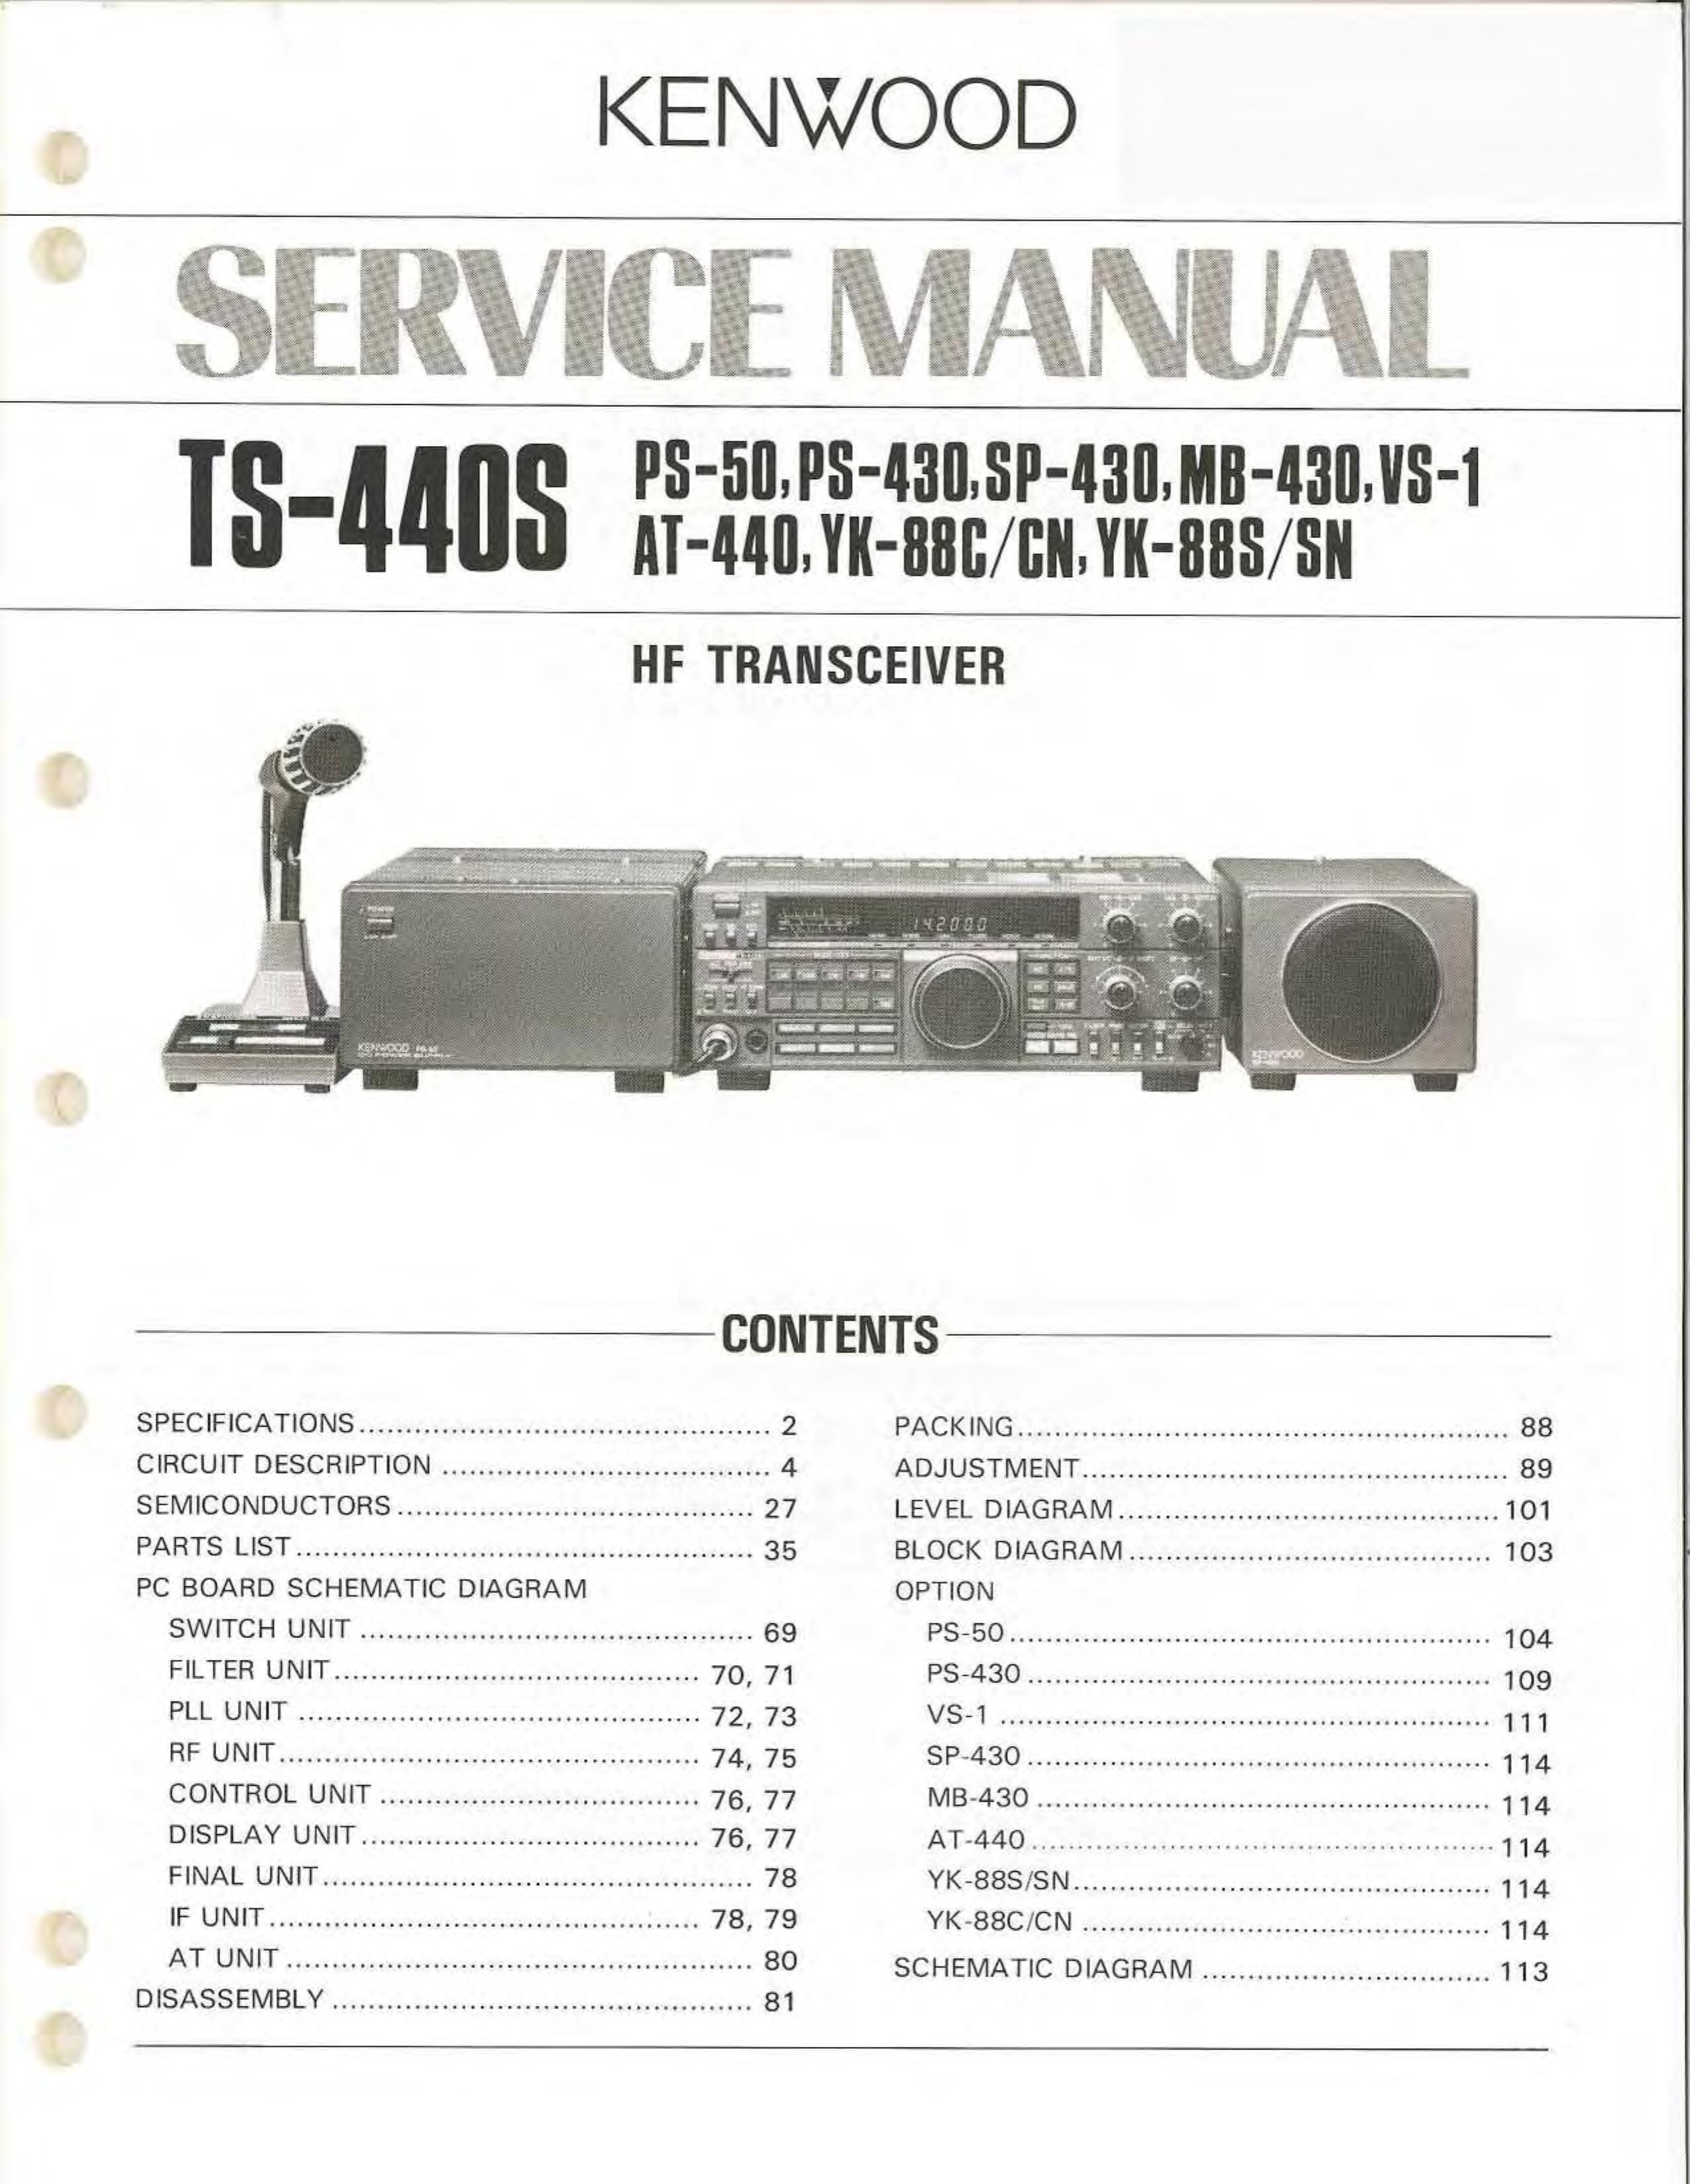 Kenwood SP-430 Marine Radio User Manual